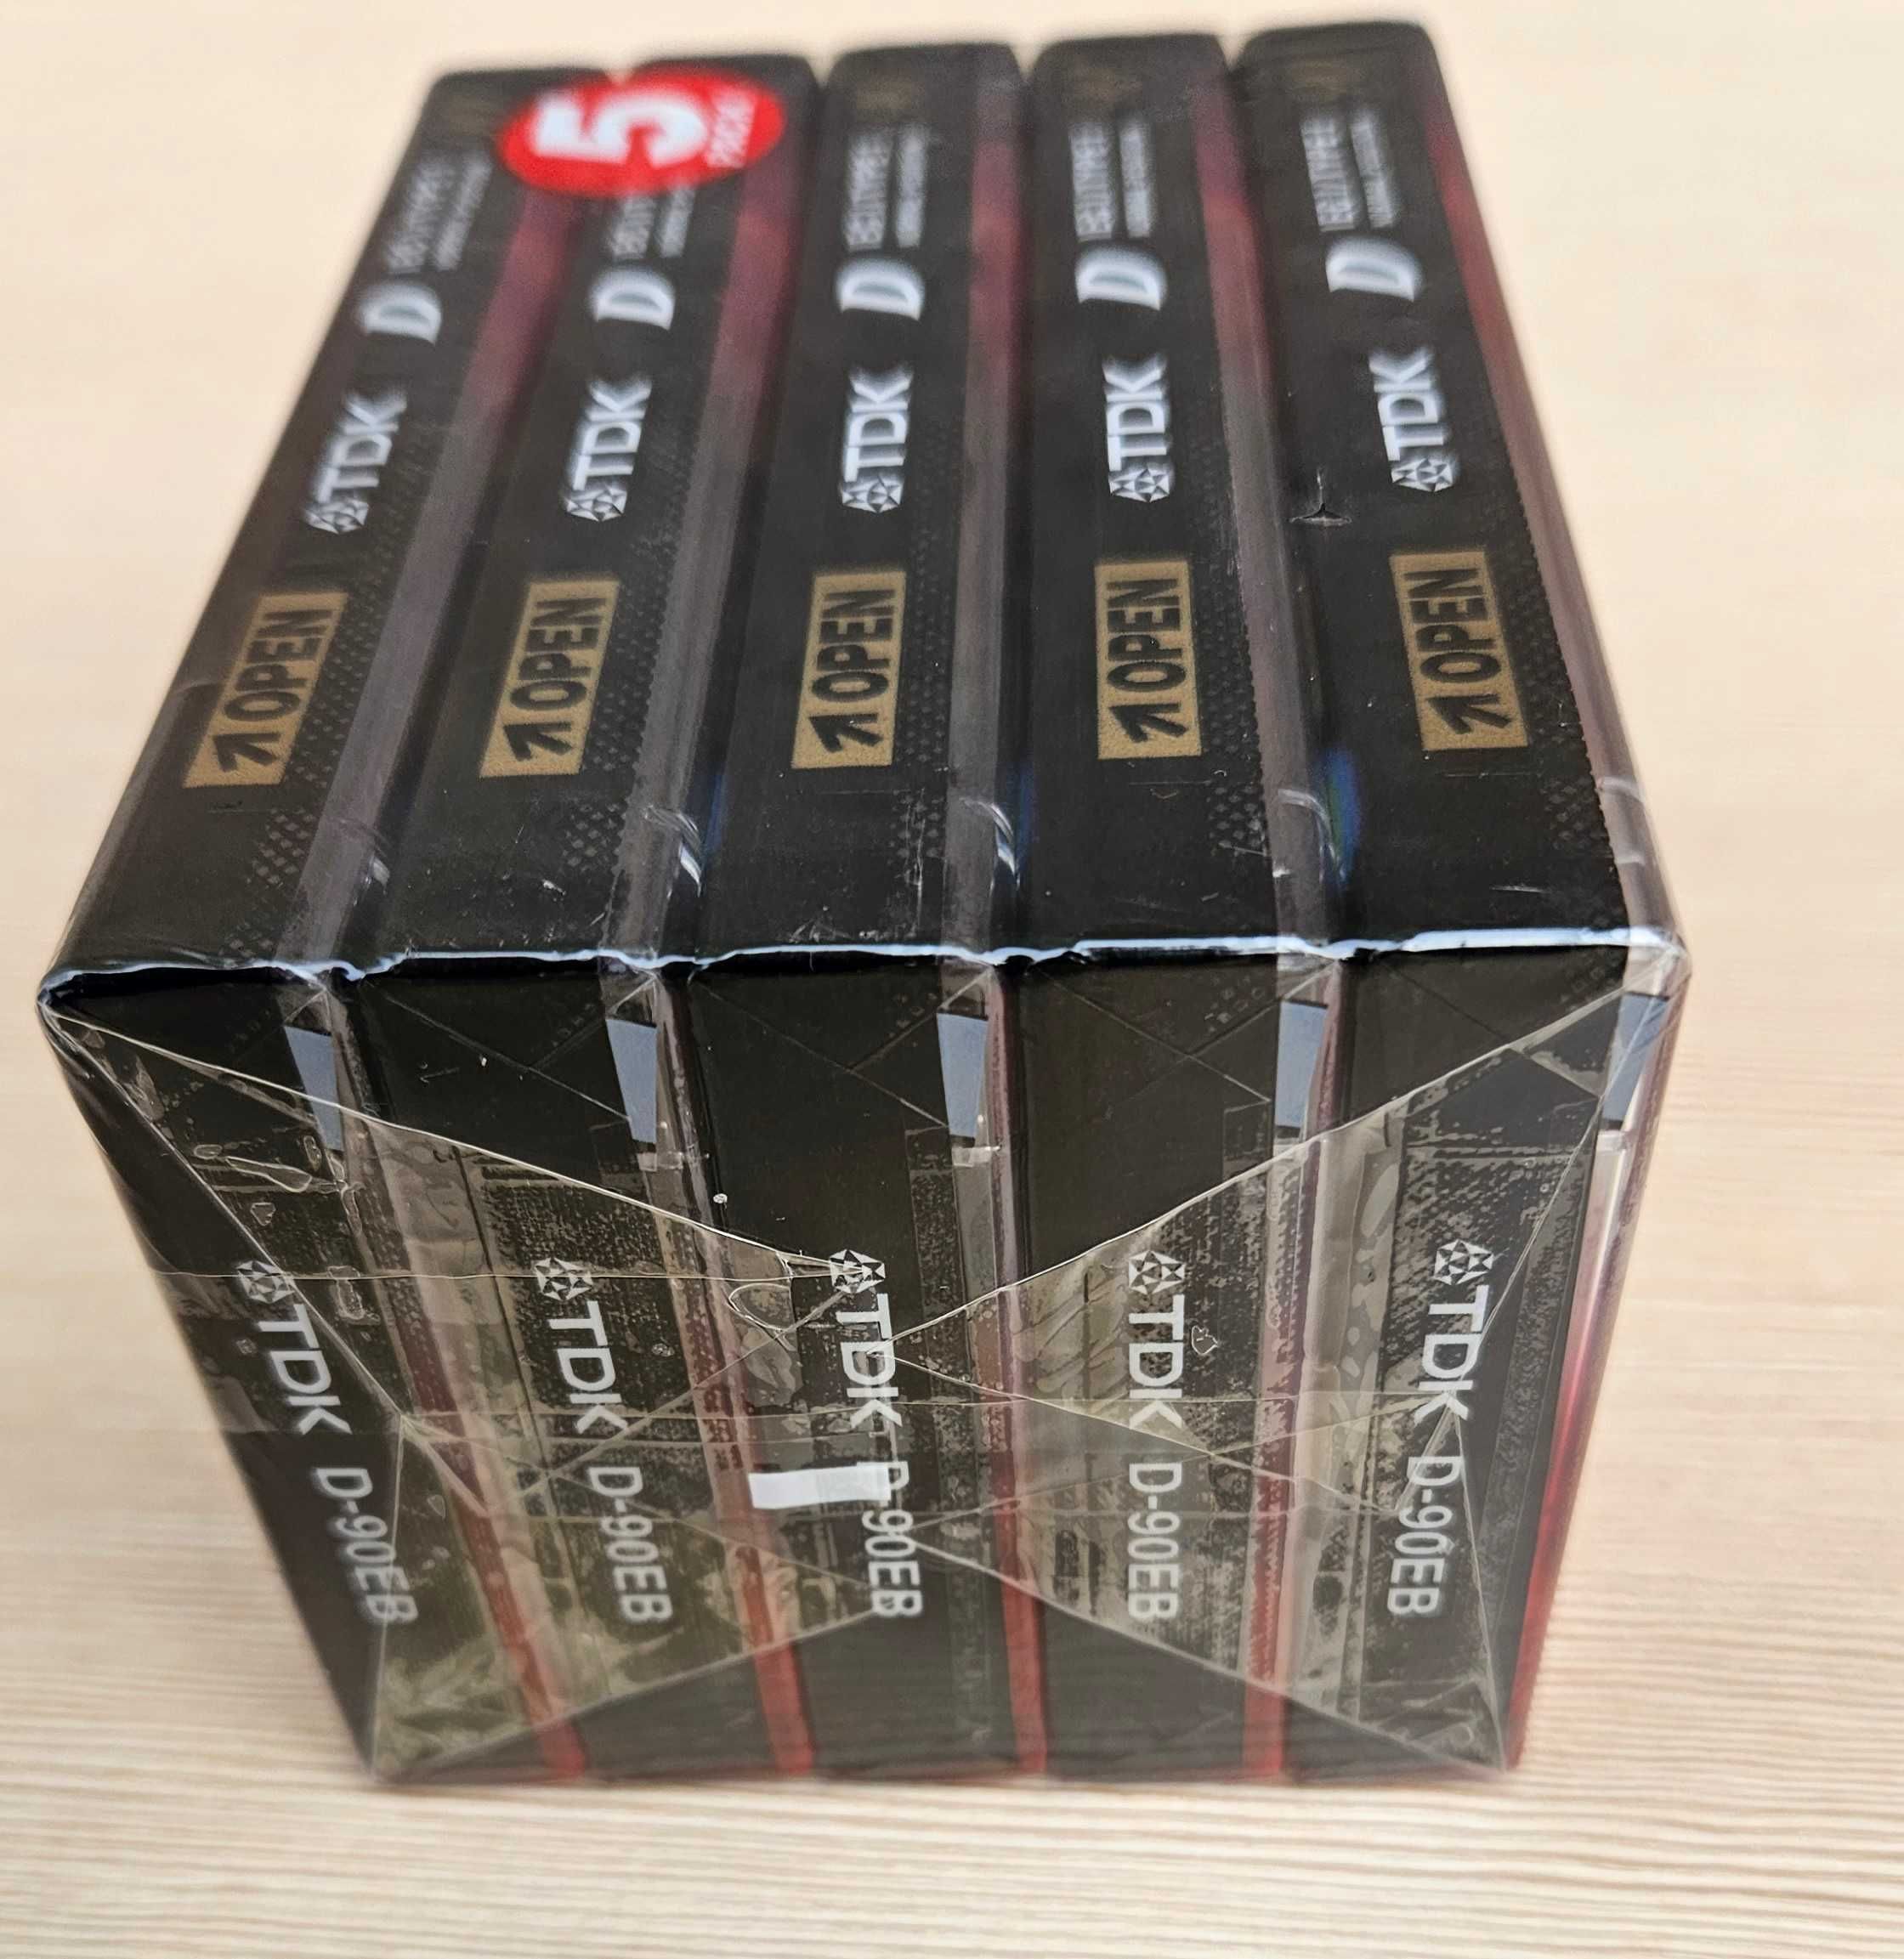 Kasety audio TDK zestaw pięciu kaset